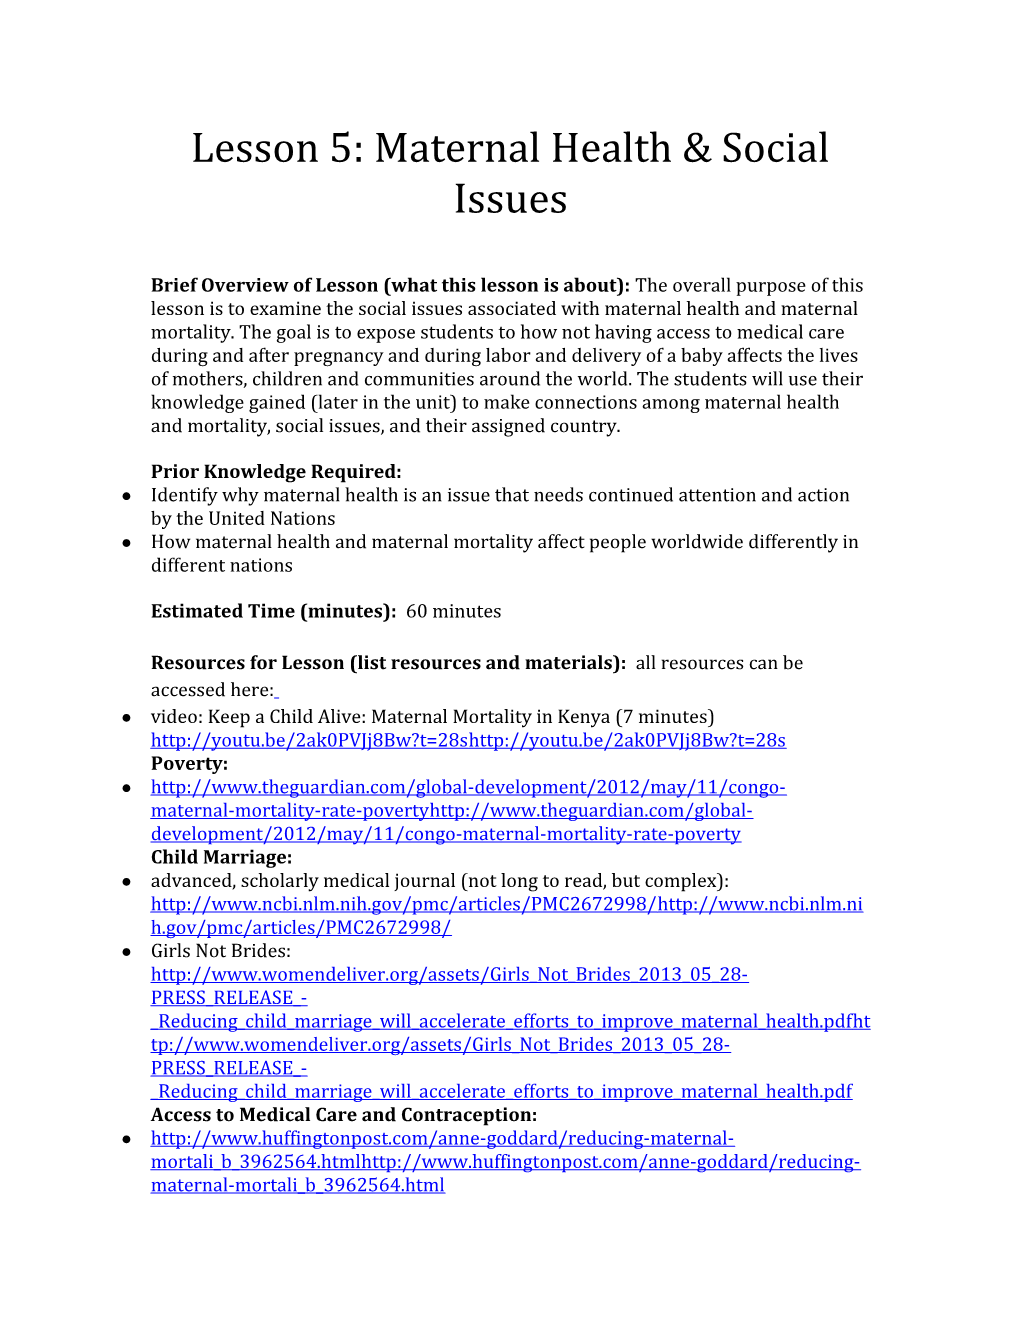 Lesson 5: Maternal Health & Social Issues